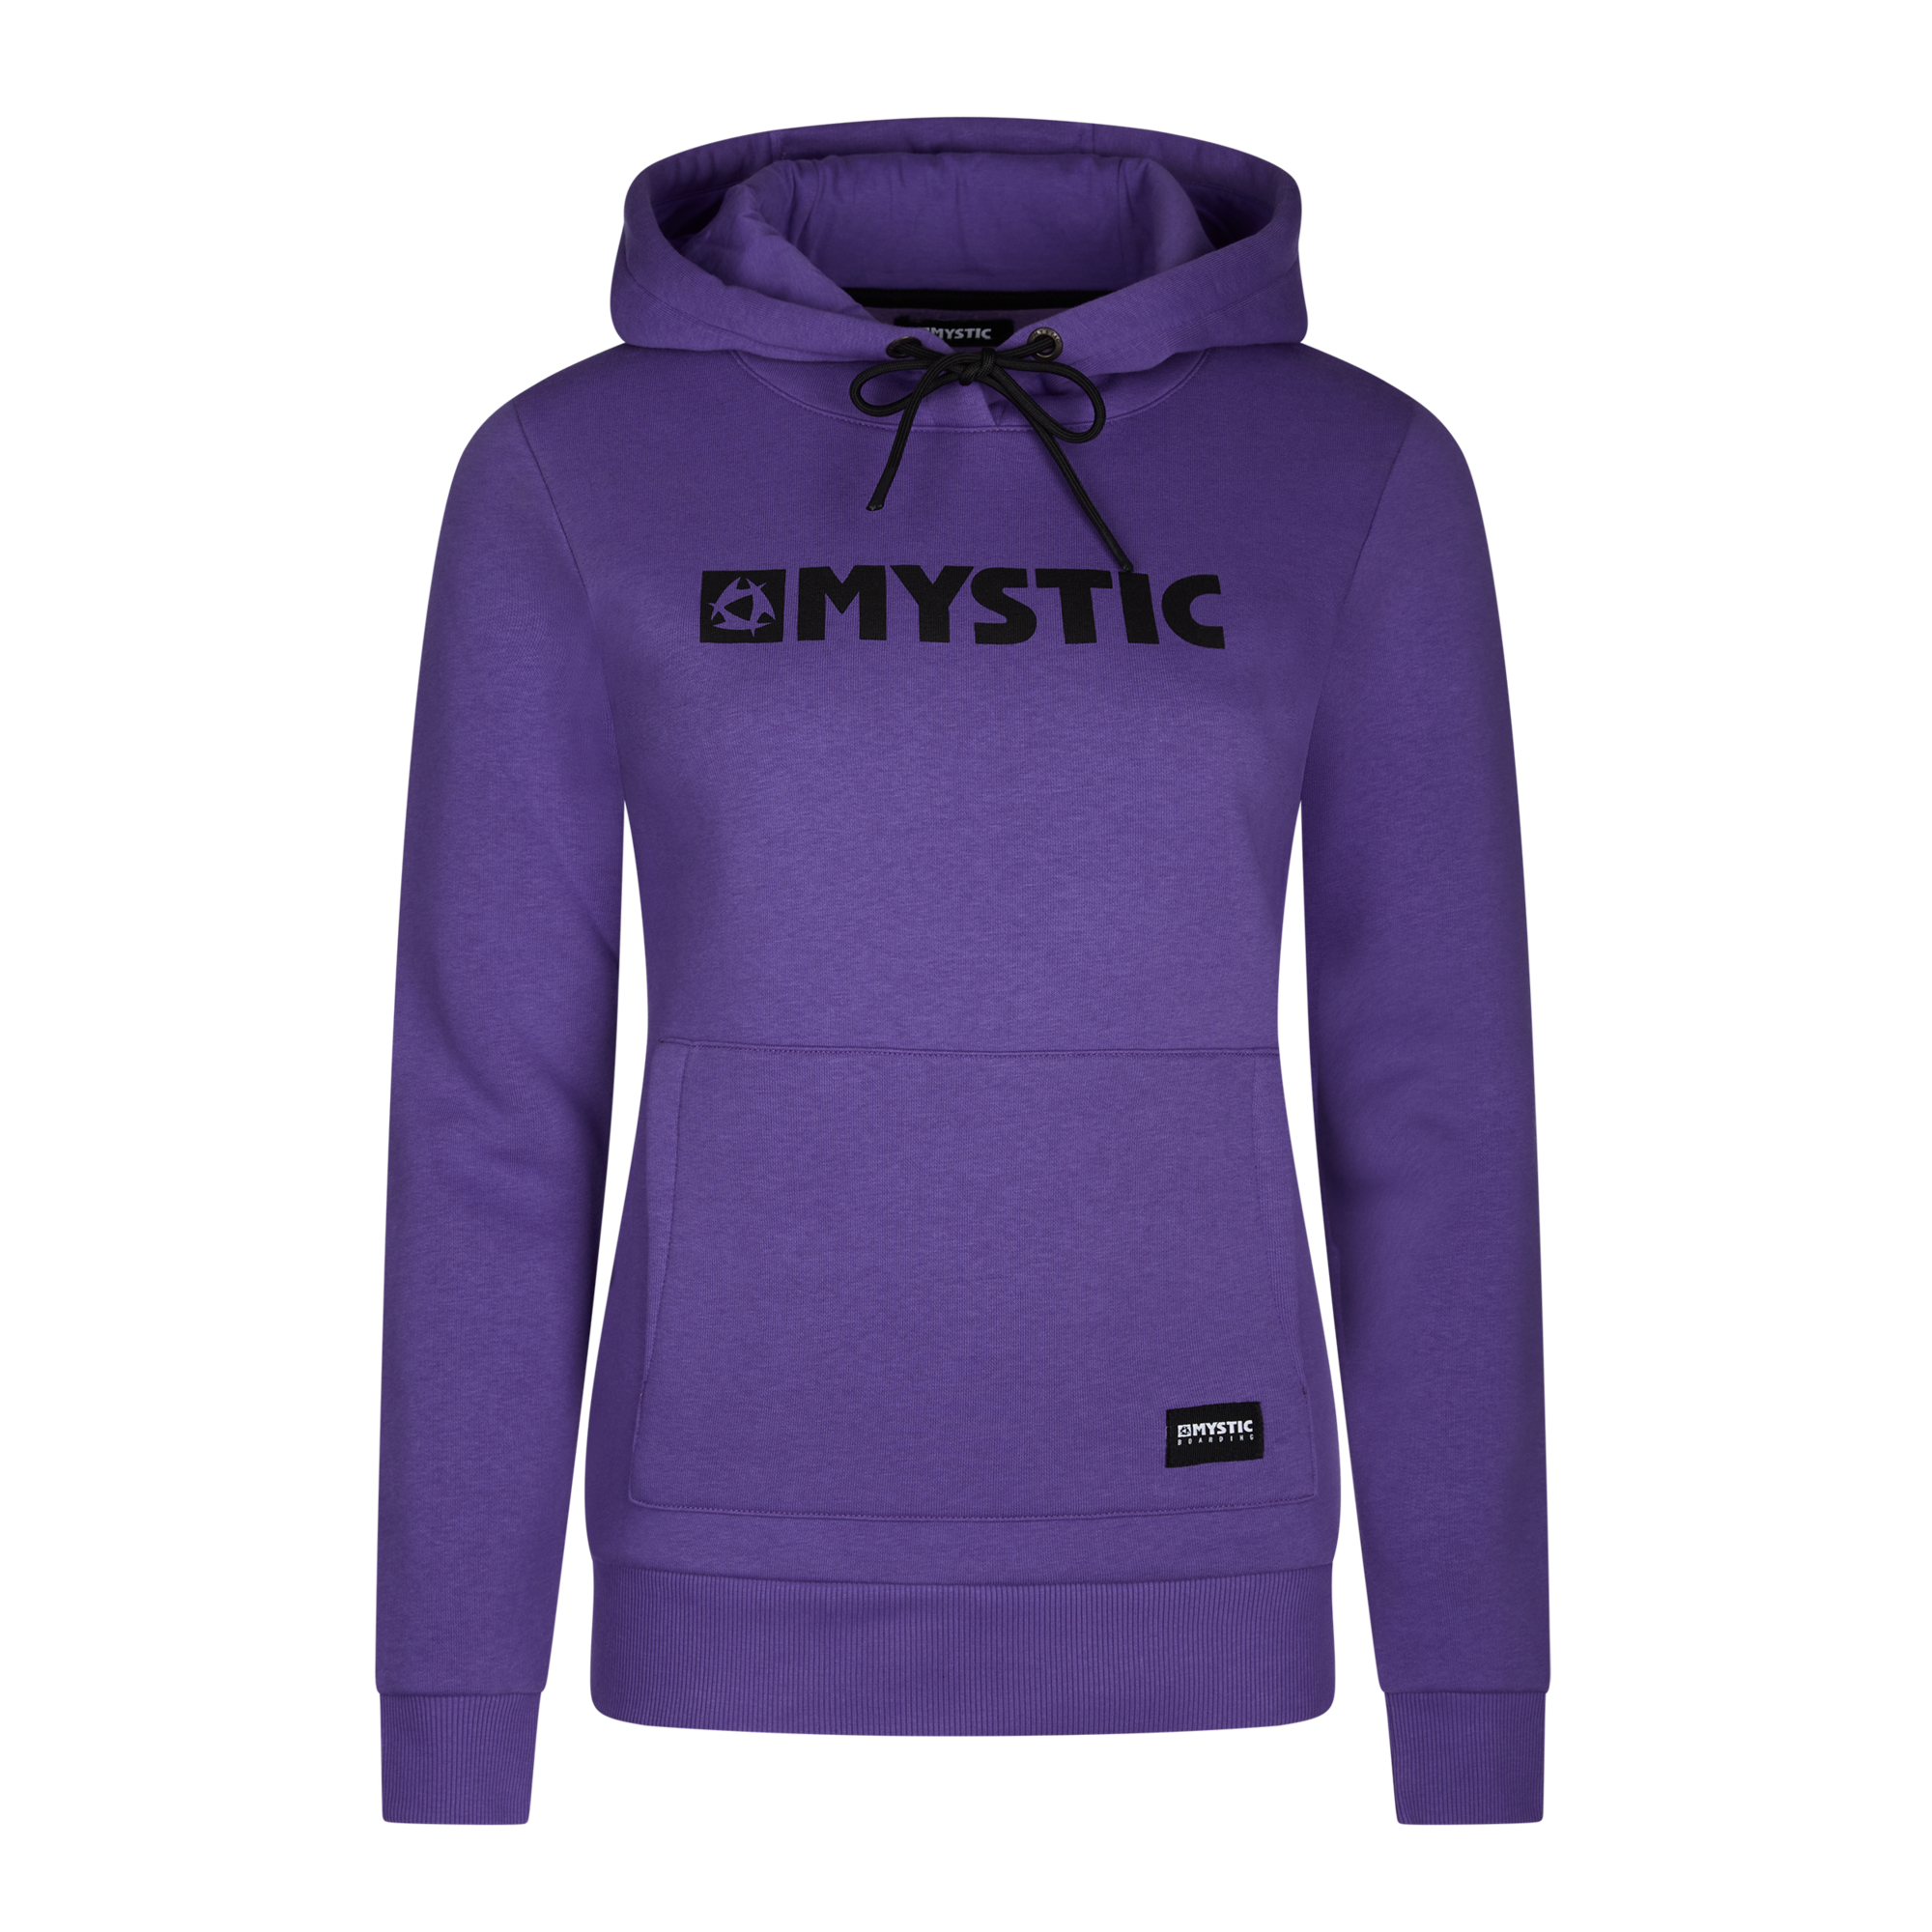 Mystic women's Brand Hood sweater purple